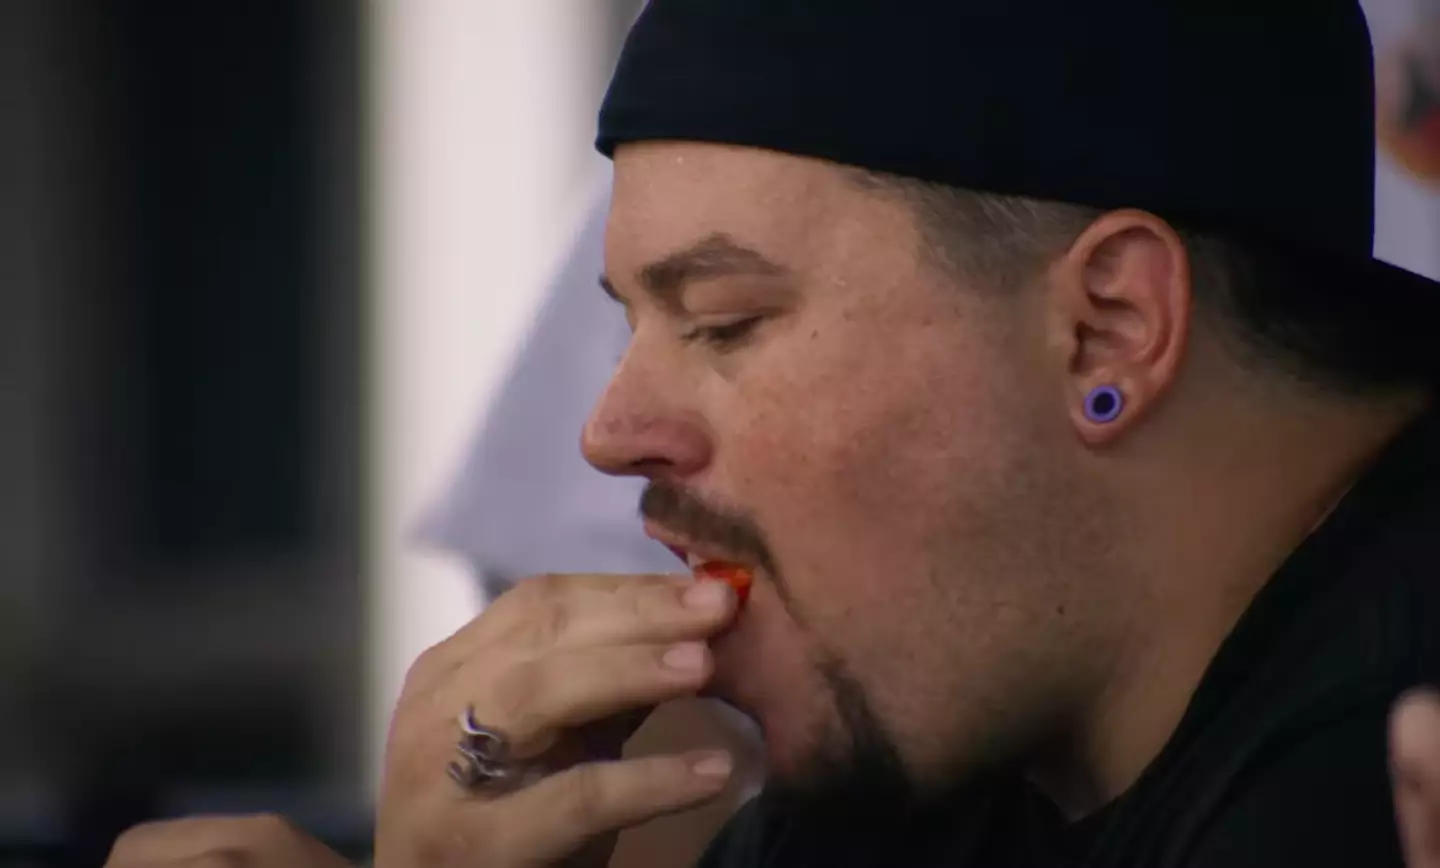 Dustin 'Atomik Menace' Johnson showed no emotion biting into the pepper.